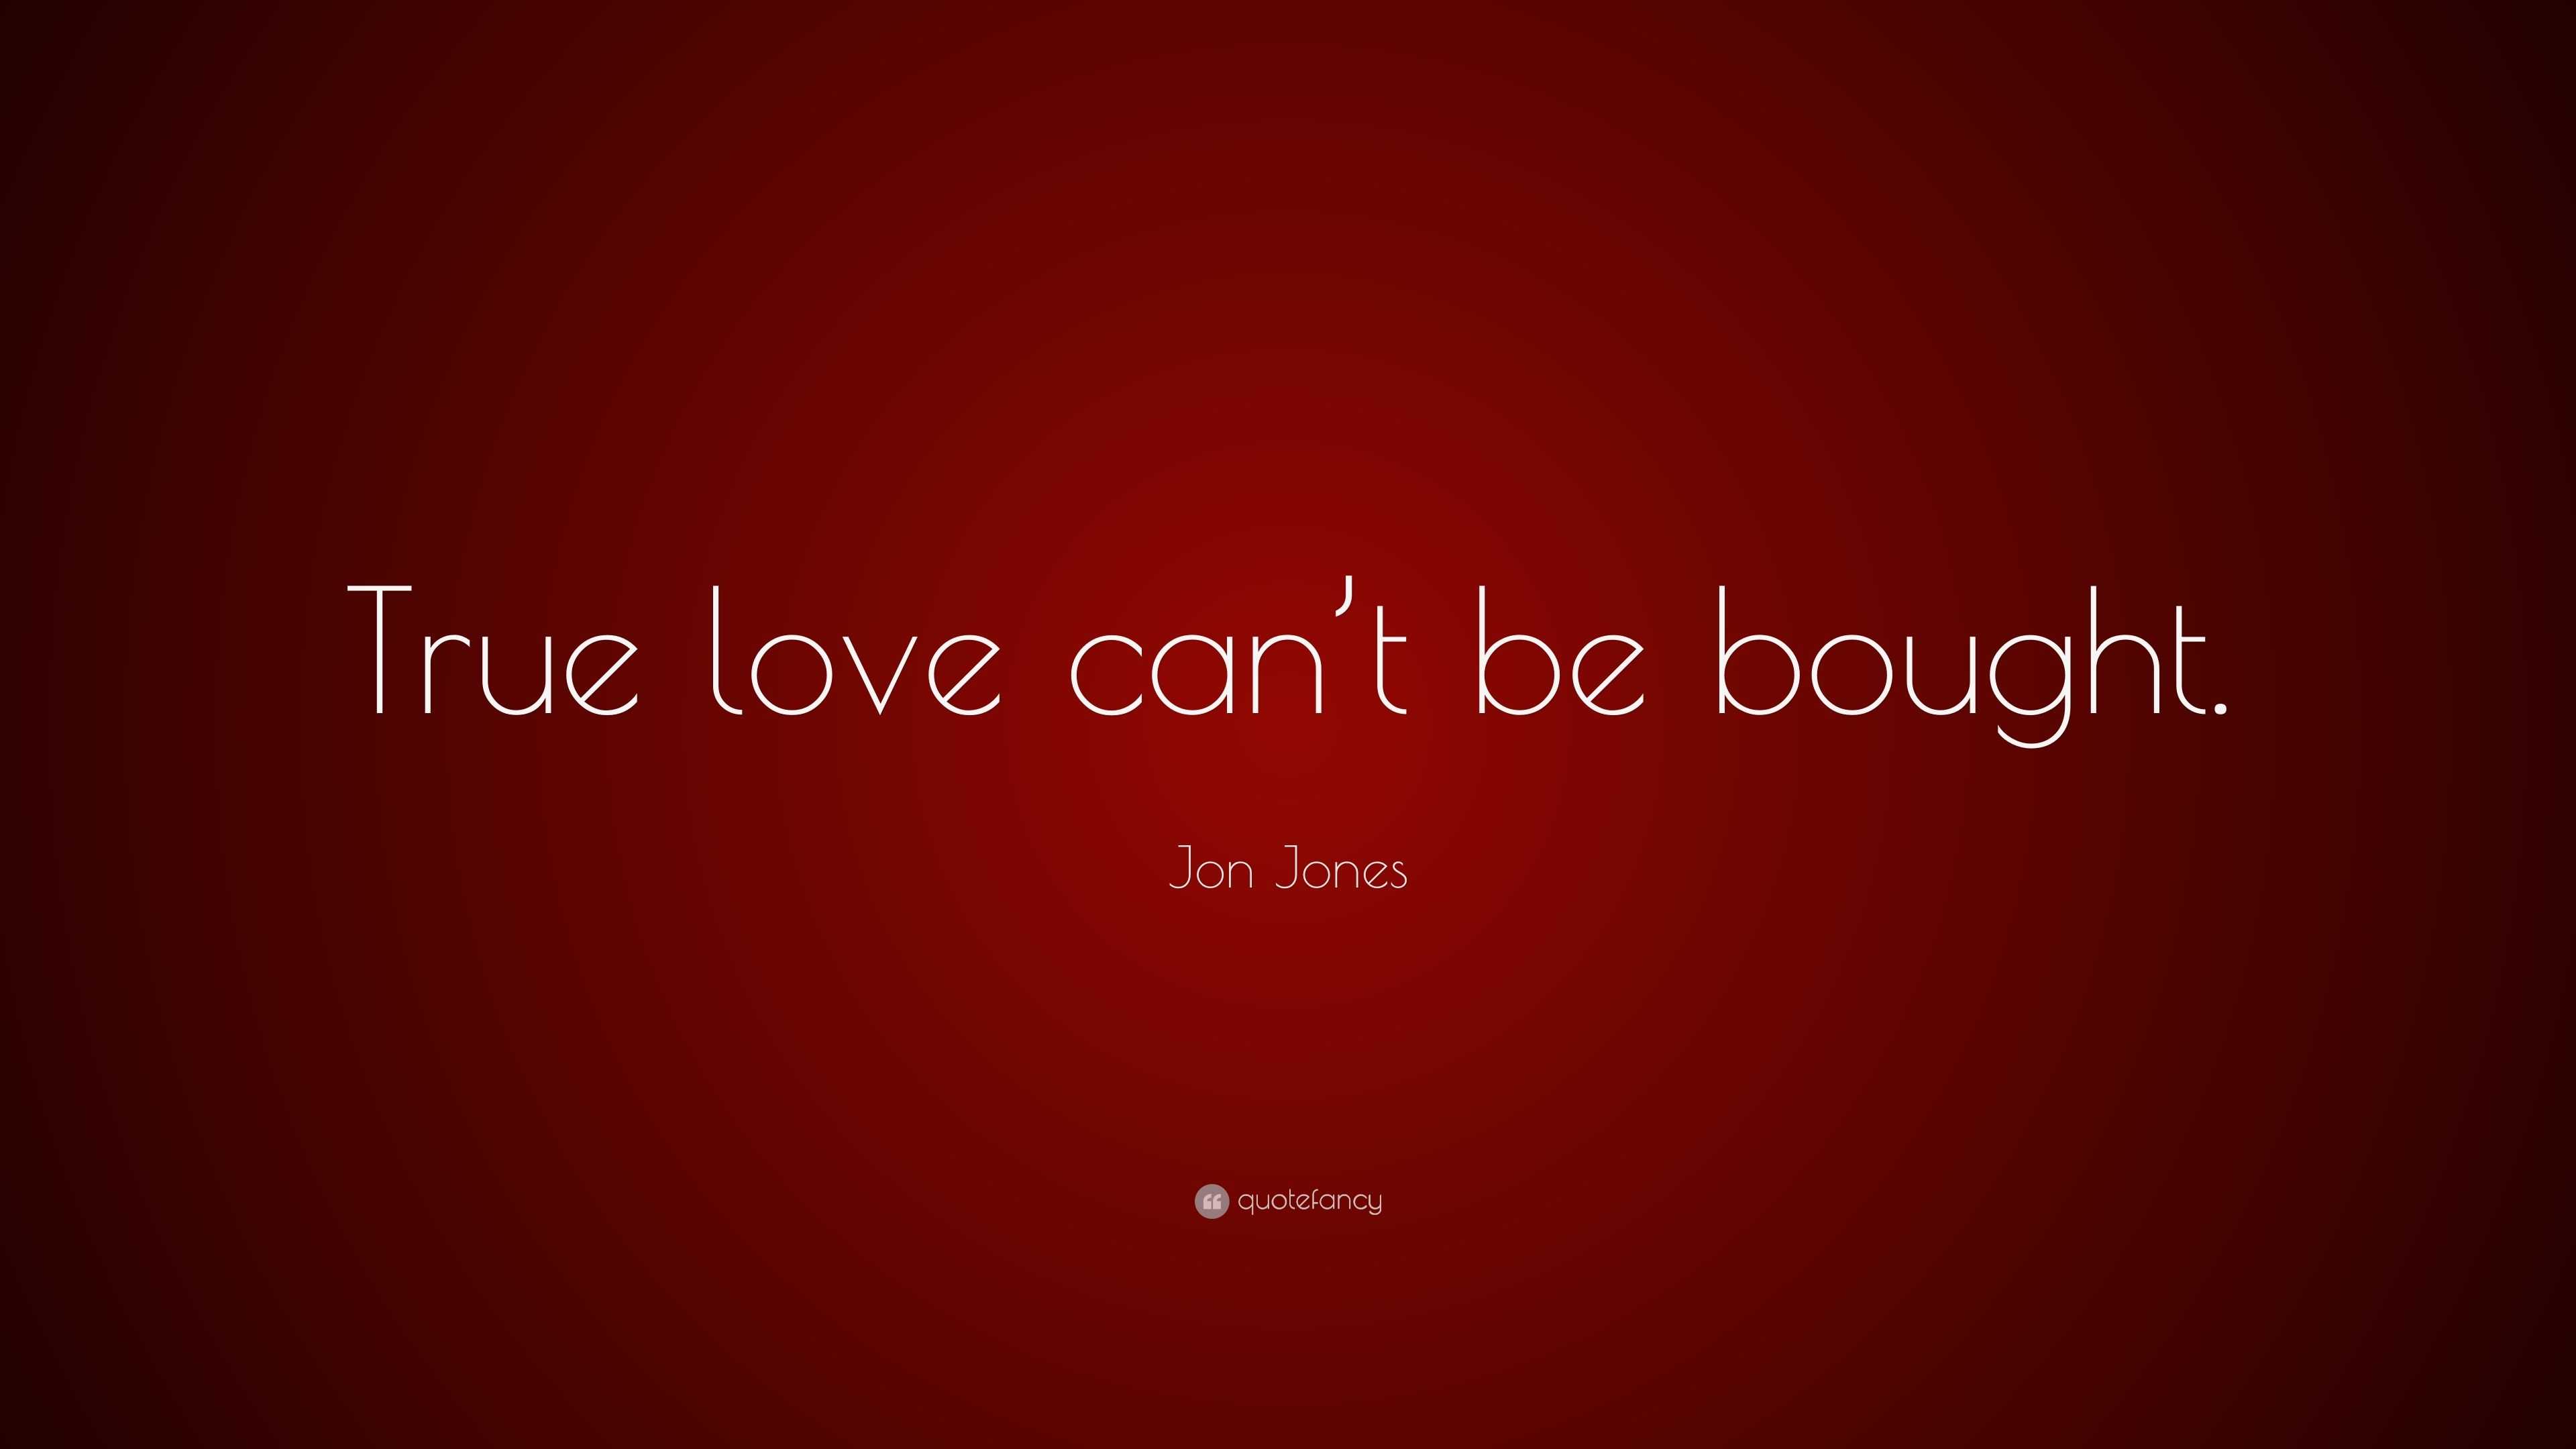 Jon Jones Quote “True love can t be bought ”